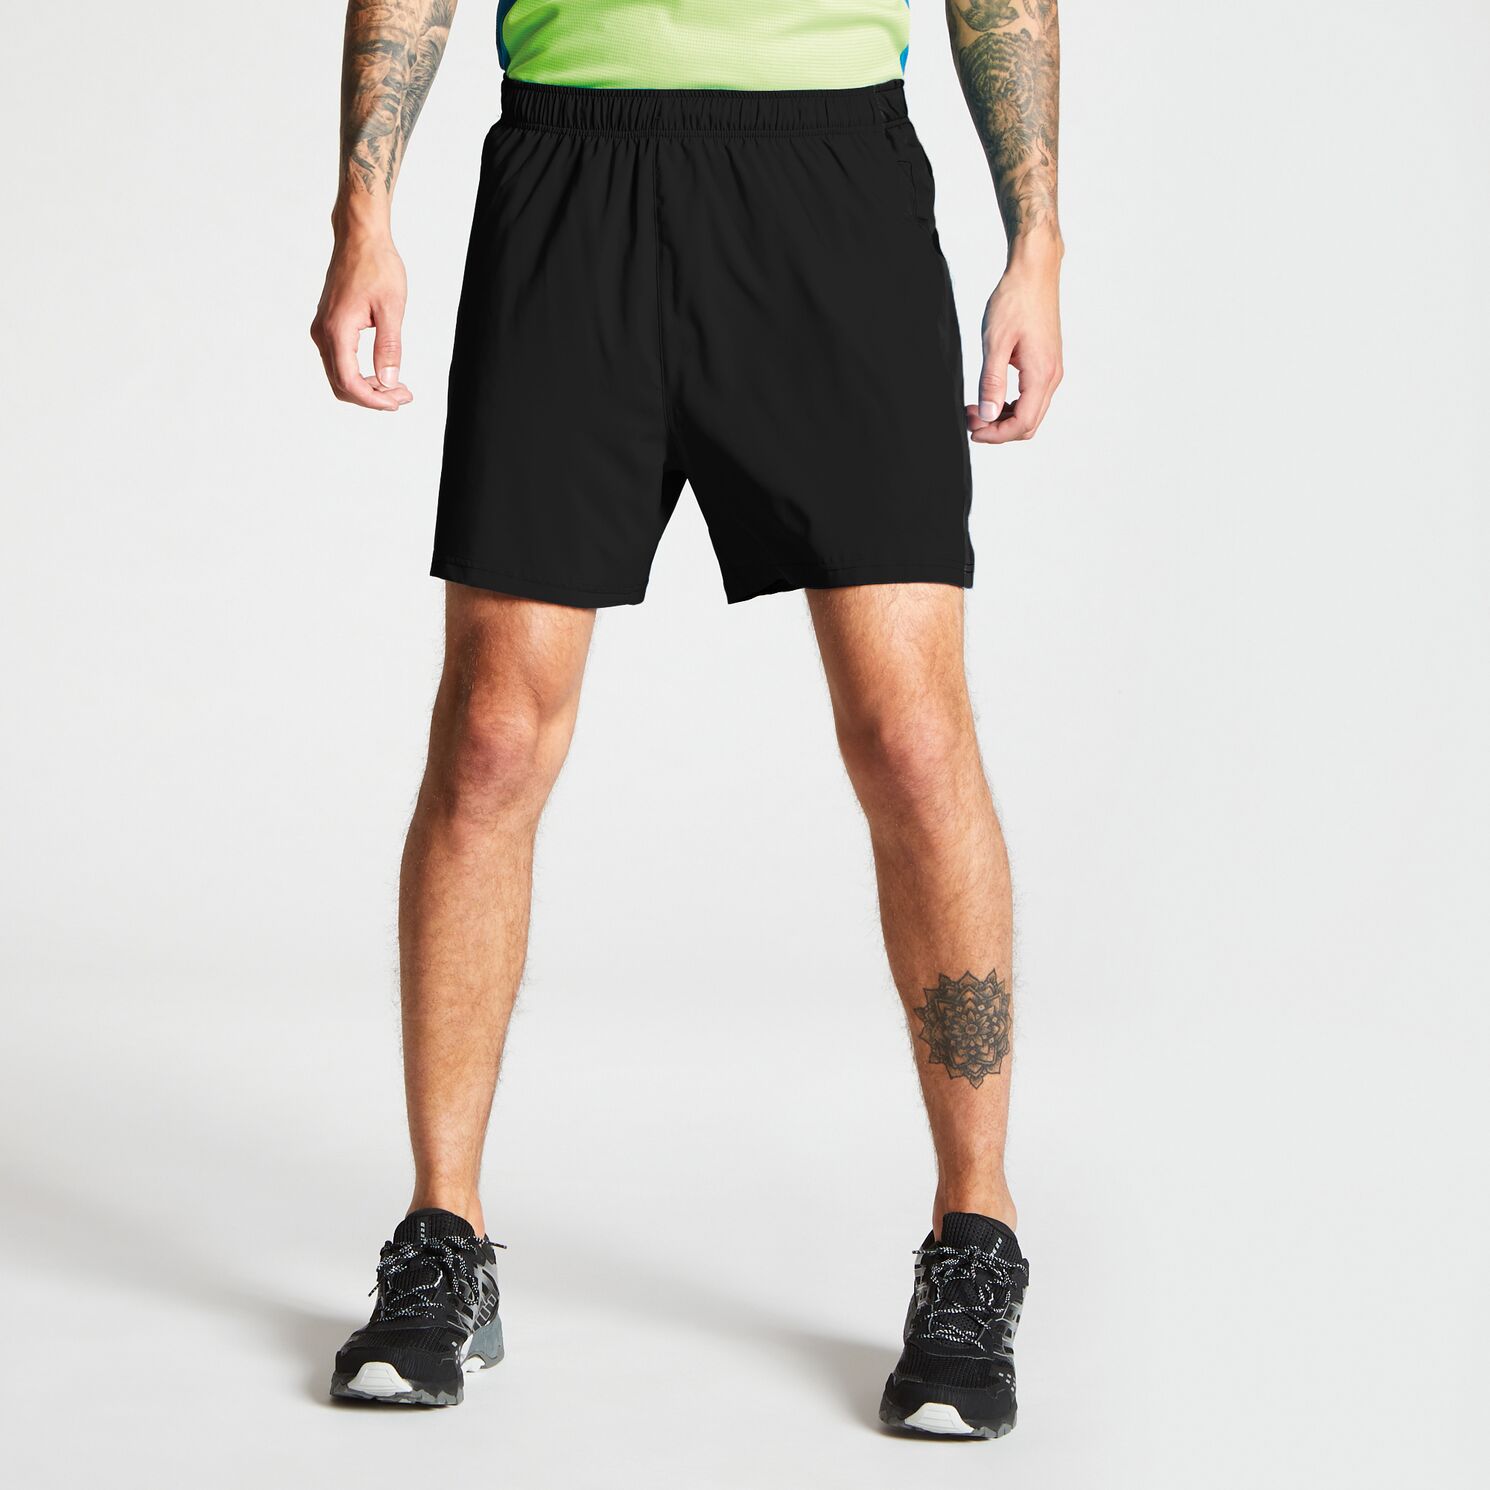 Men's Gym Shorts